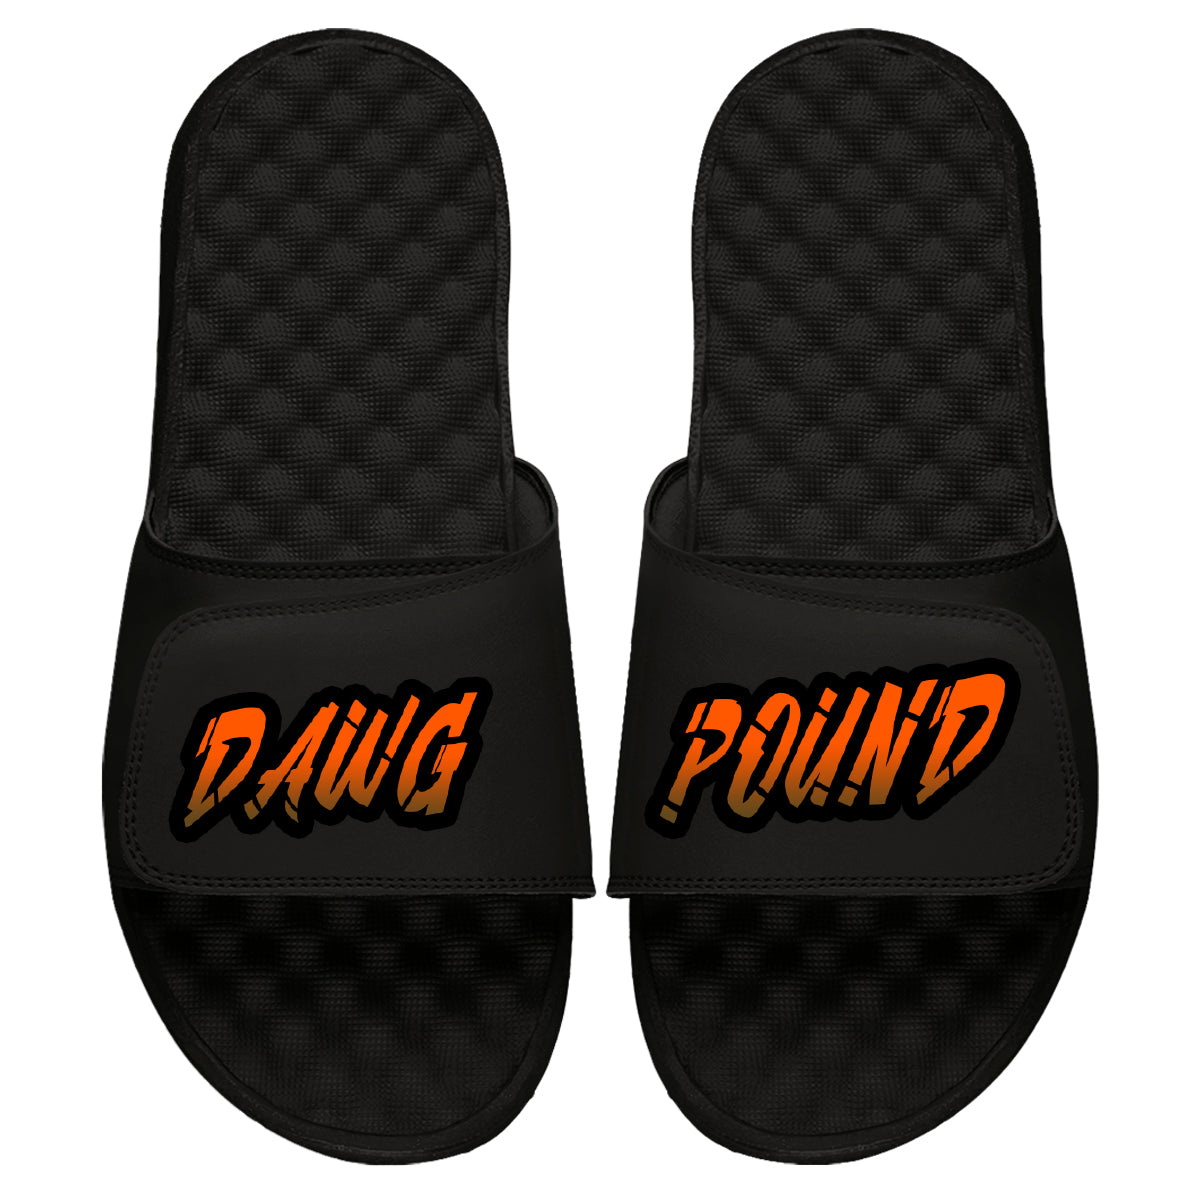 Dawg Pound- Black Slides